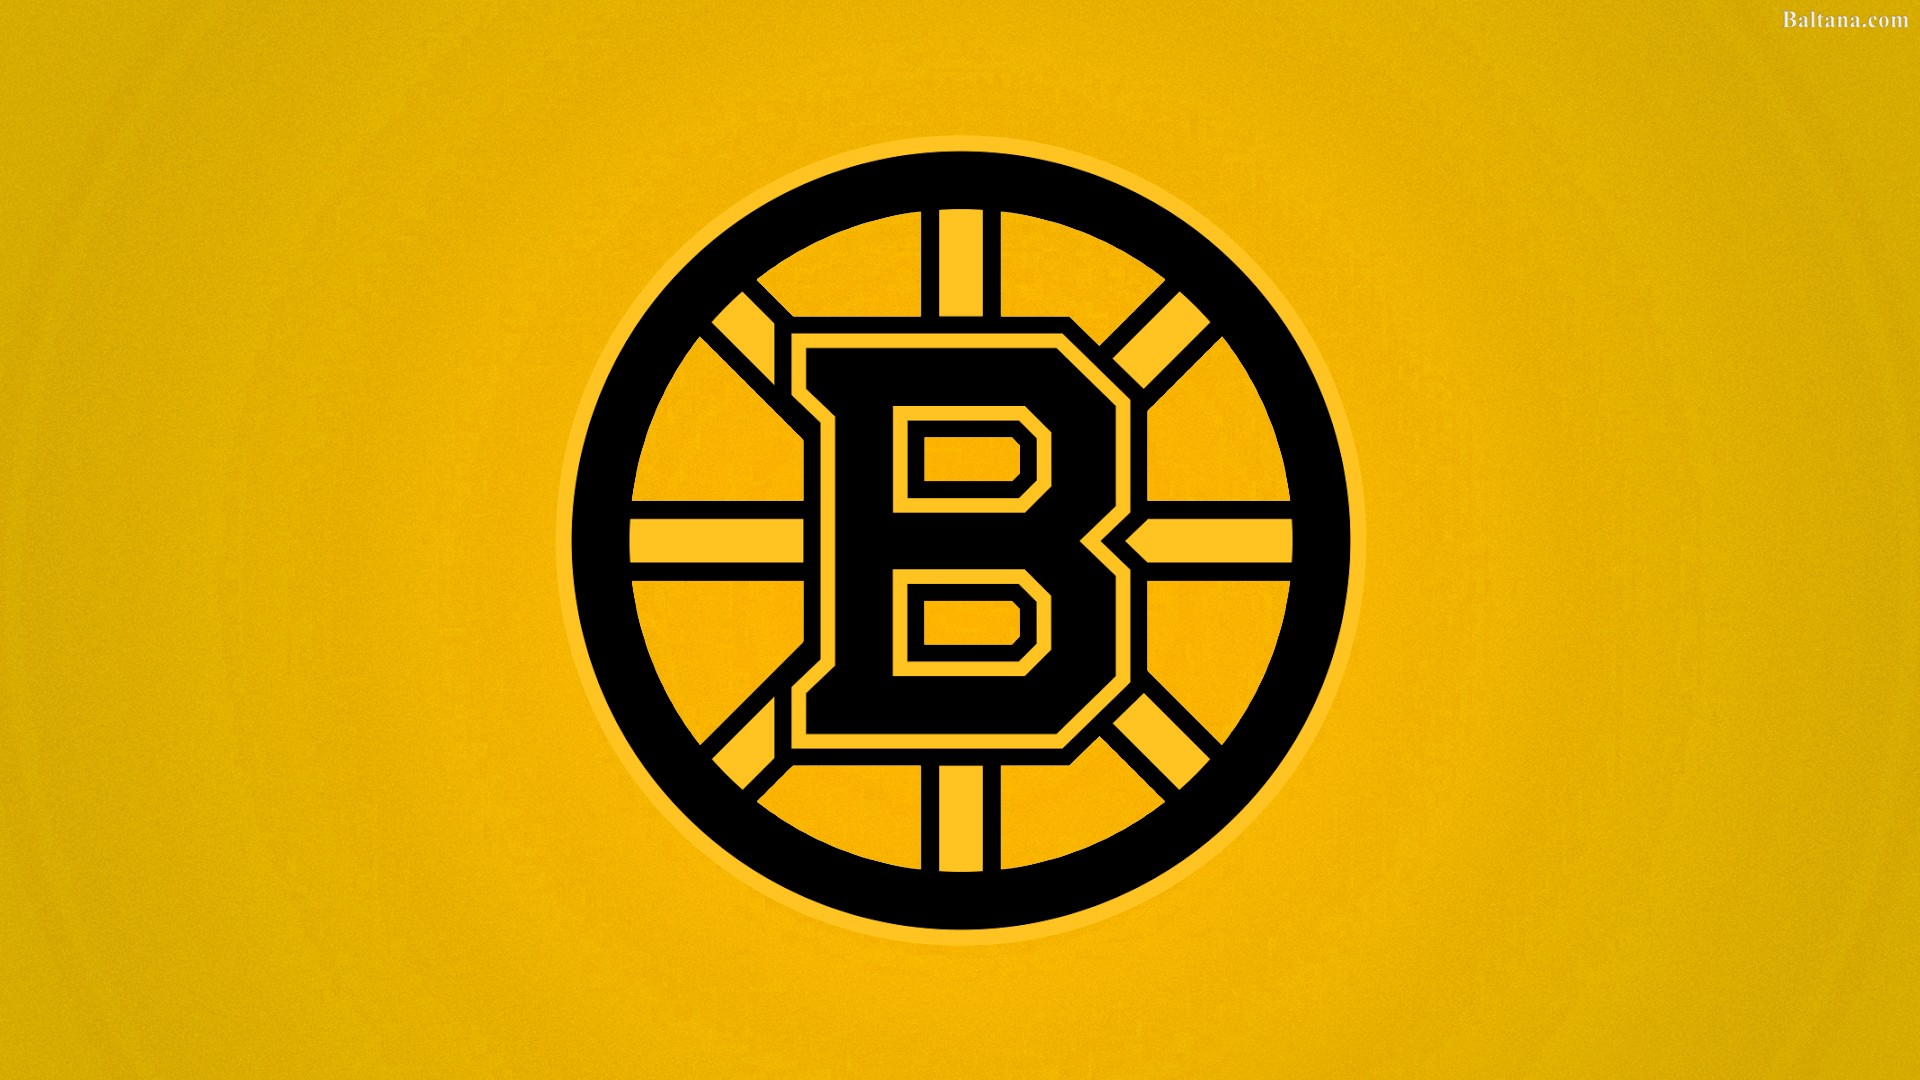 Boston Bruins Background Wallpaper.